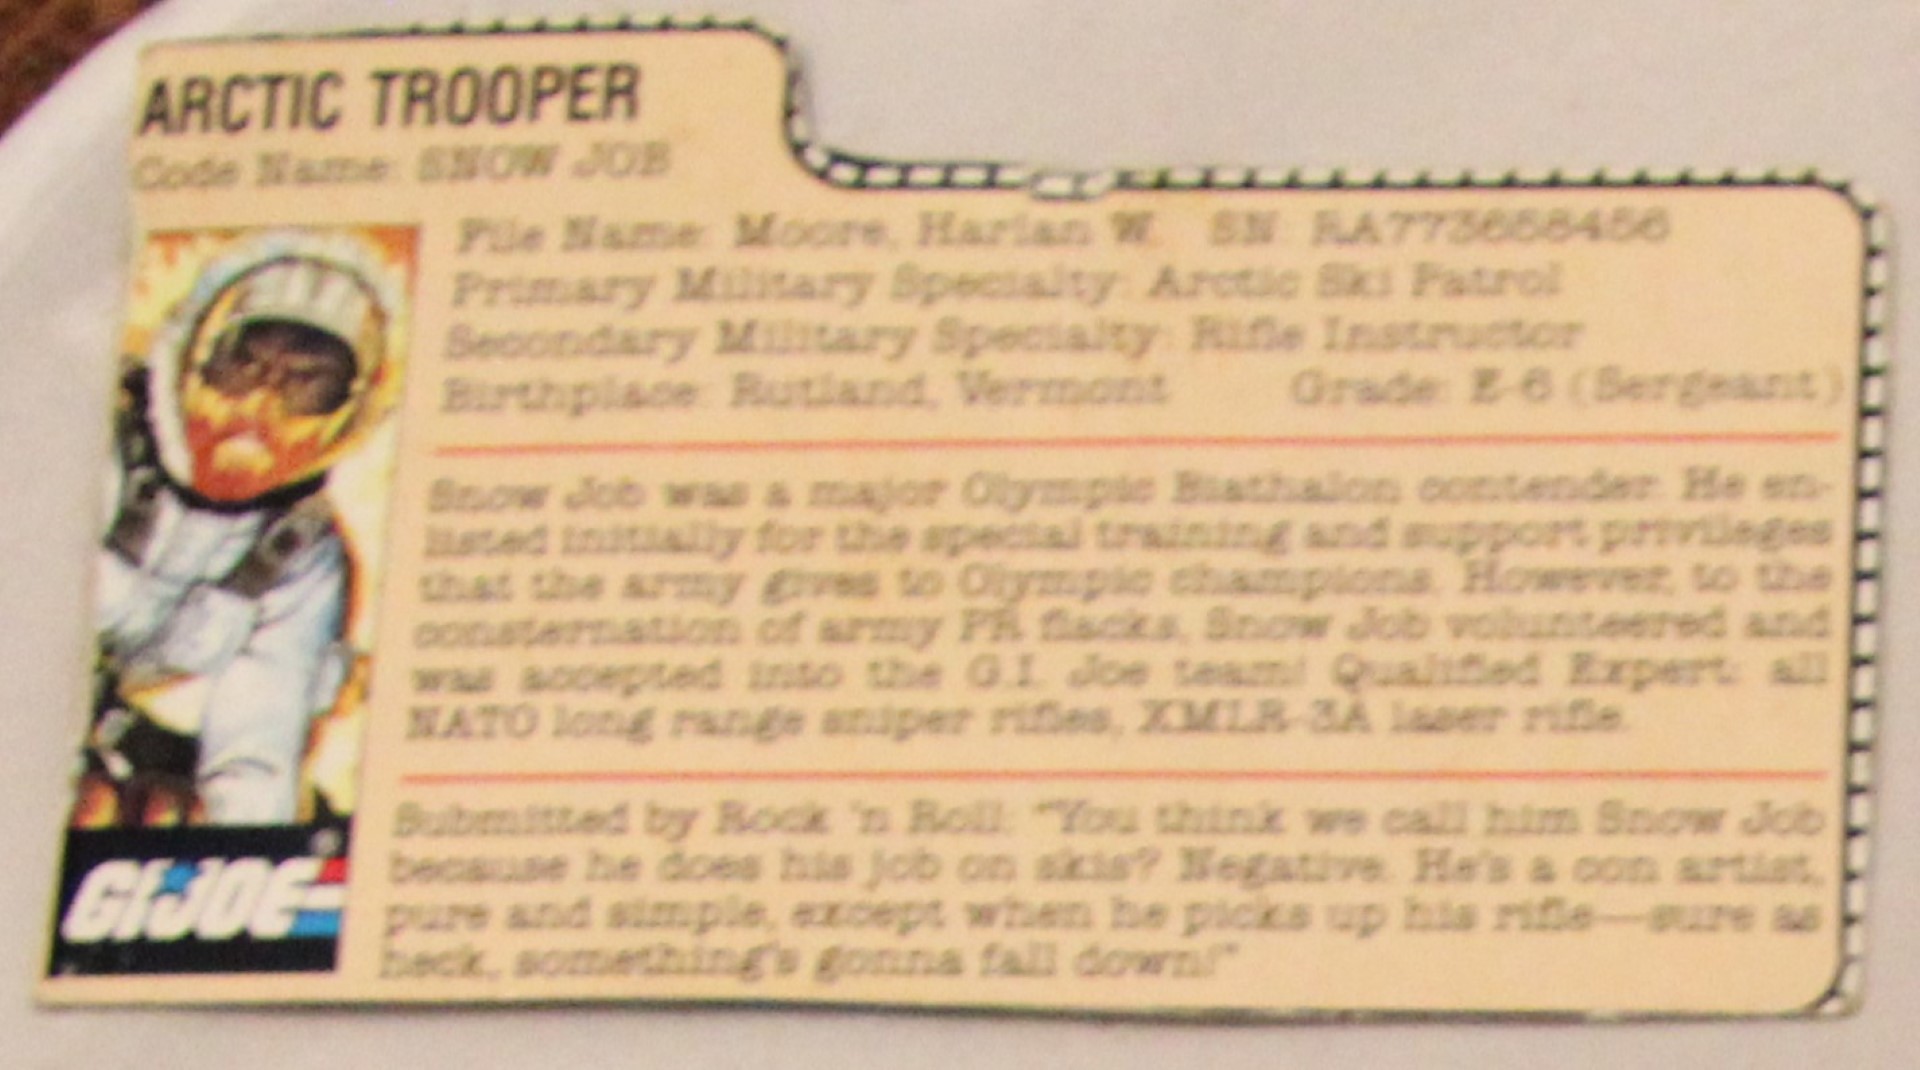 1983 snowjob file card